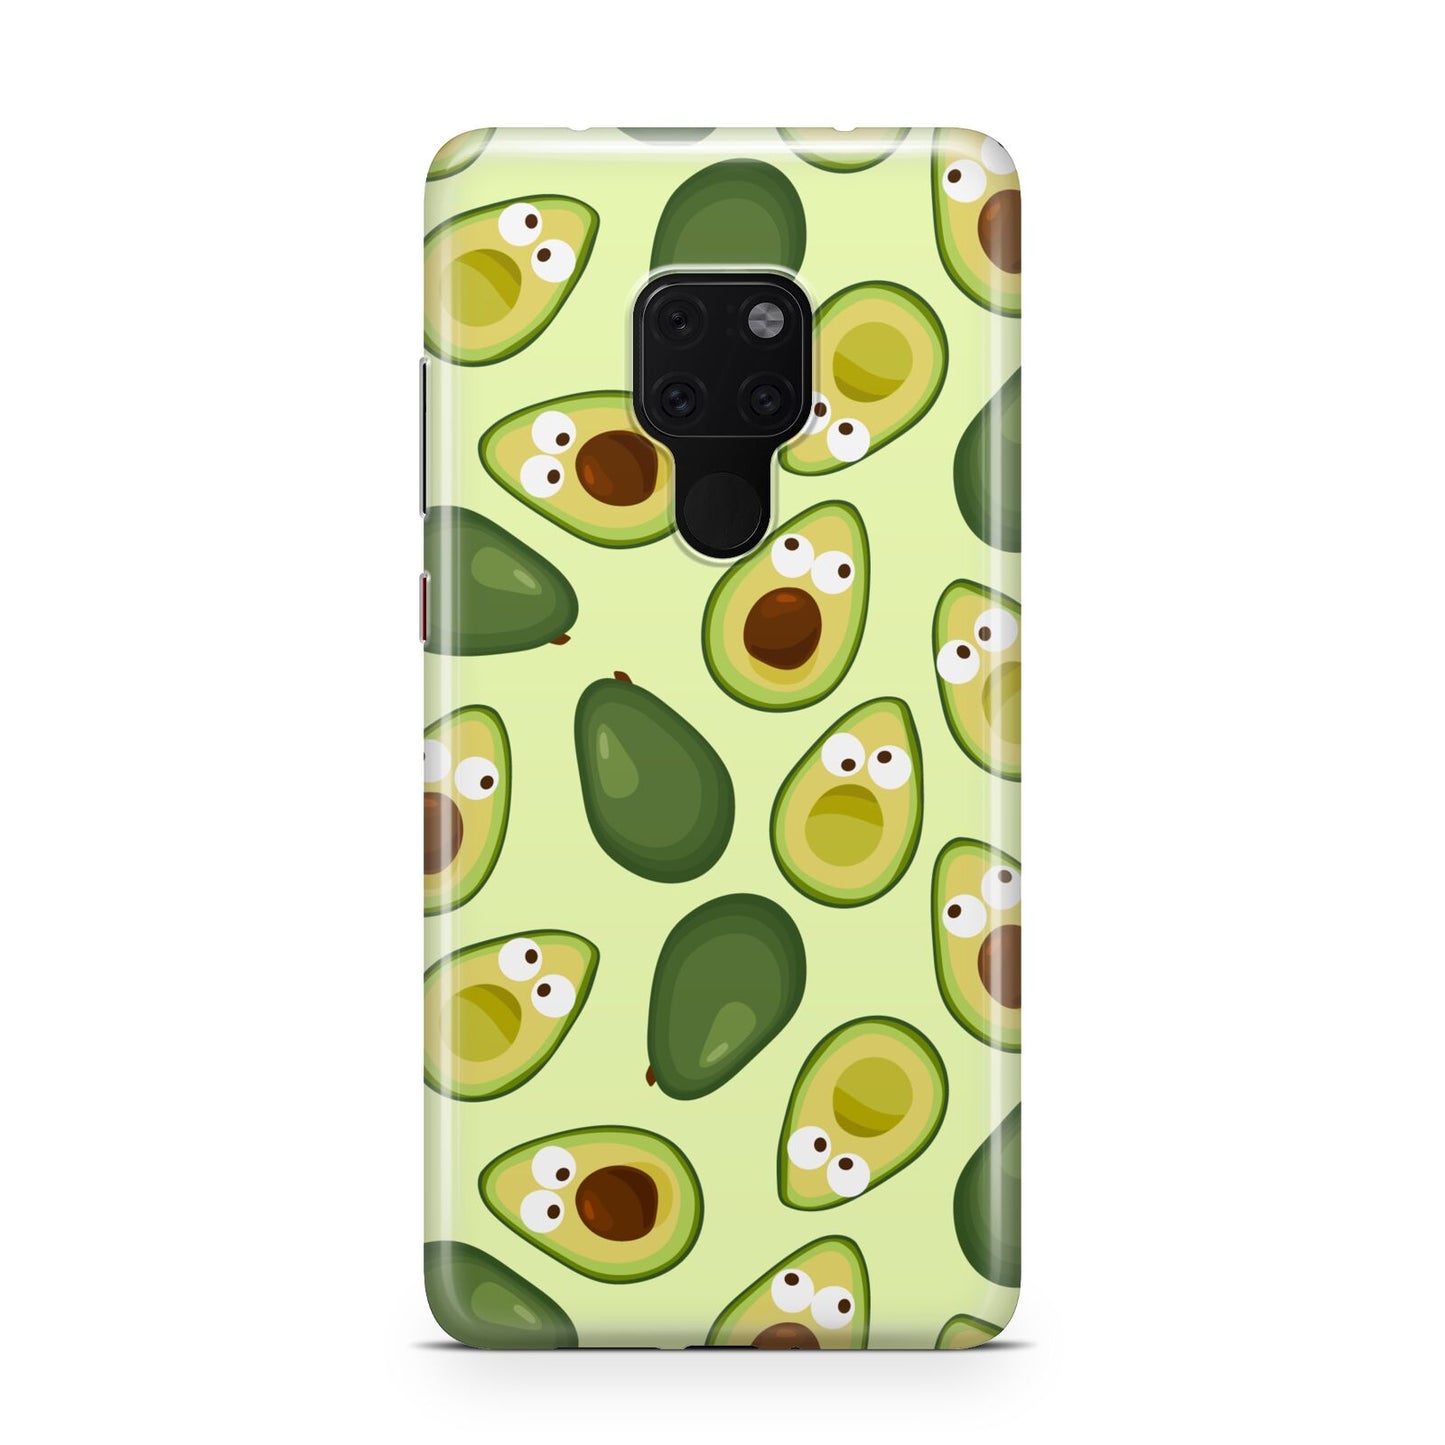 Avocado Huawei Mate 20 Phone Case